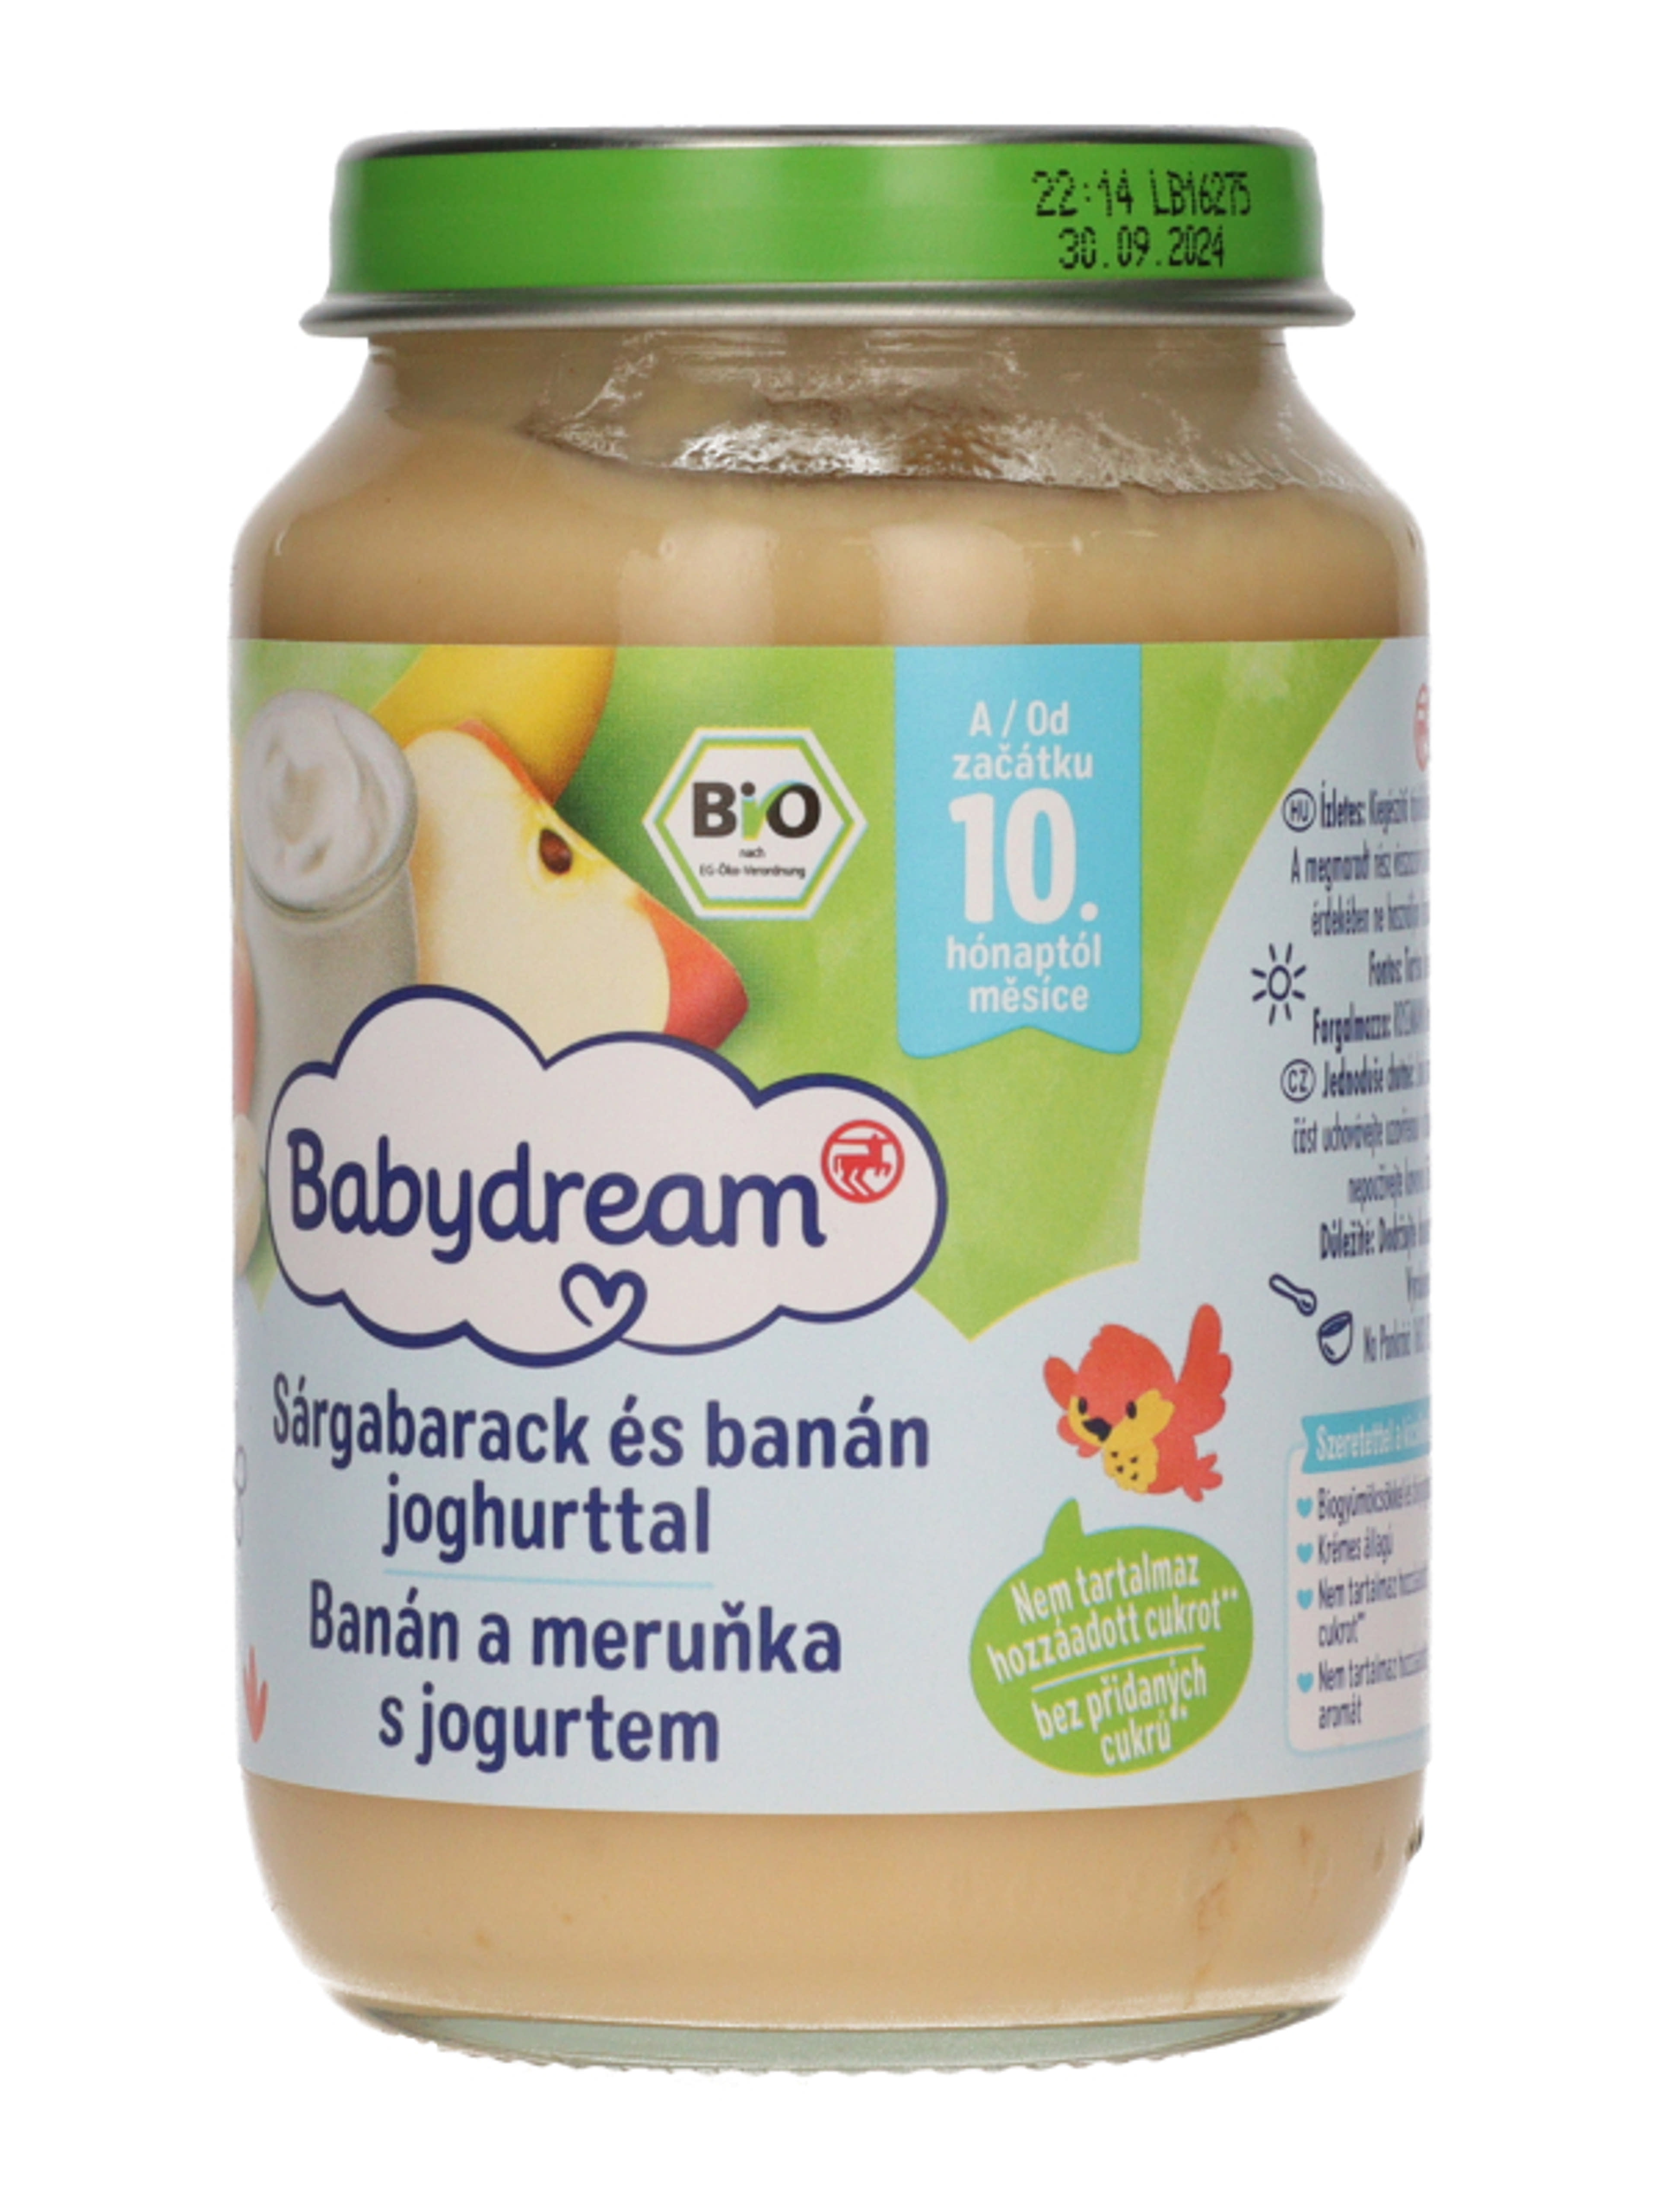 Babydream Bio bébiétel sárgabarack almában, joghurttal 9/10 hónapos kortól - 190 g-3